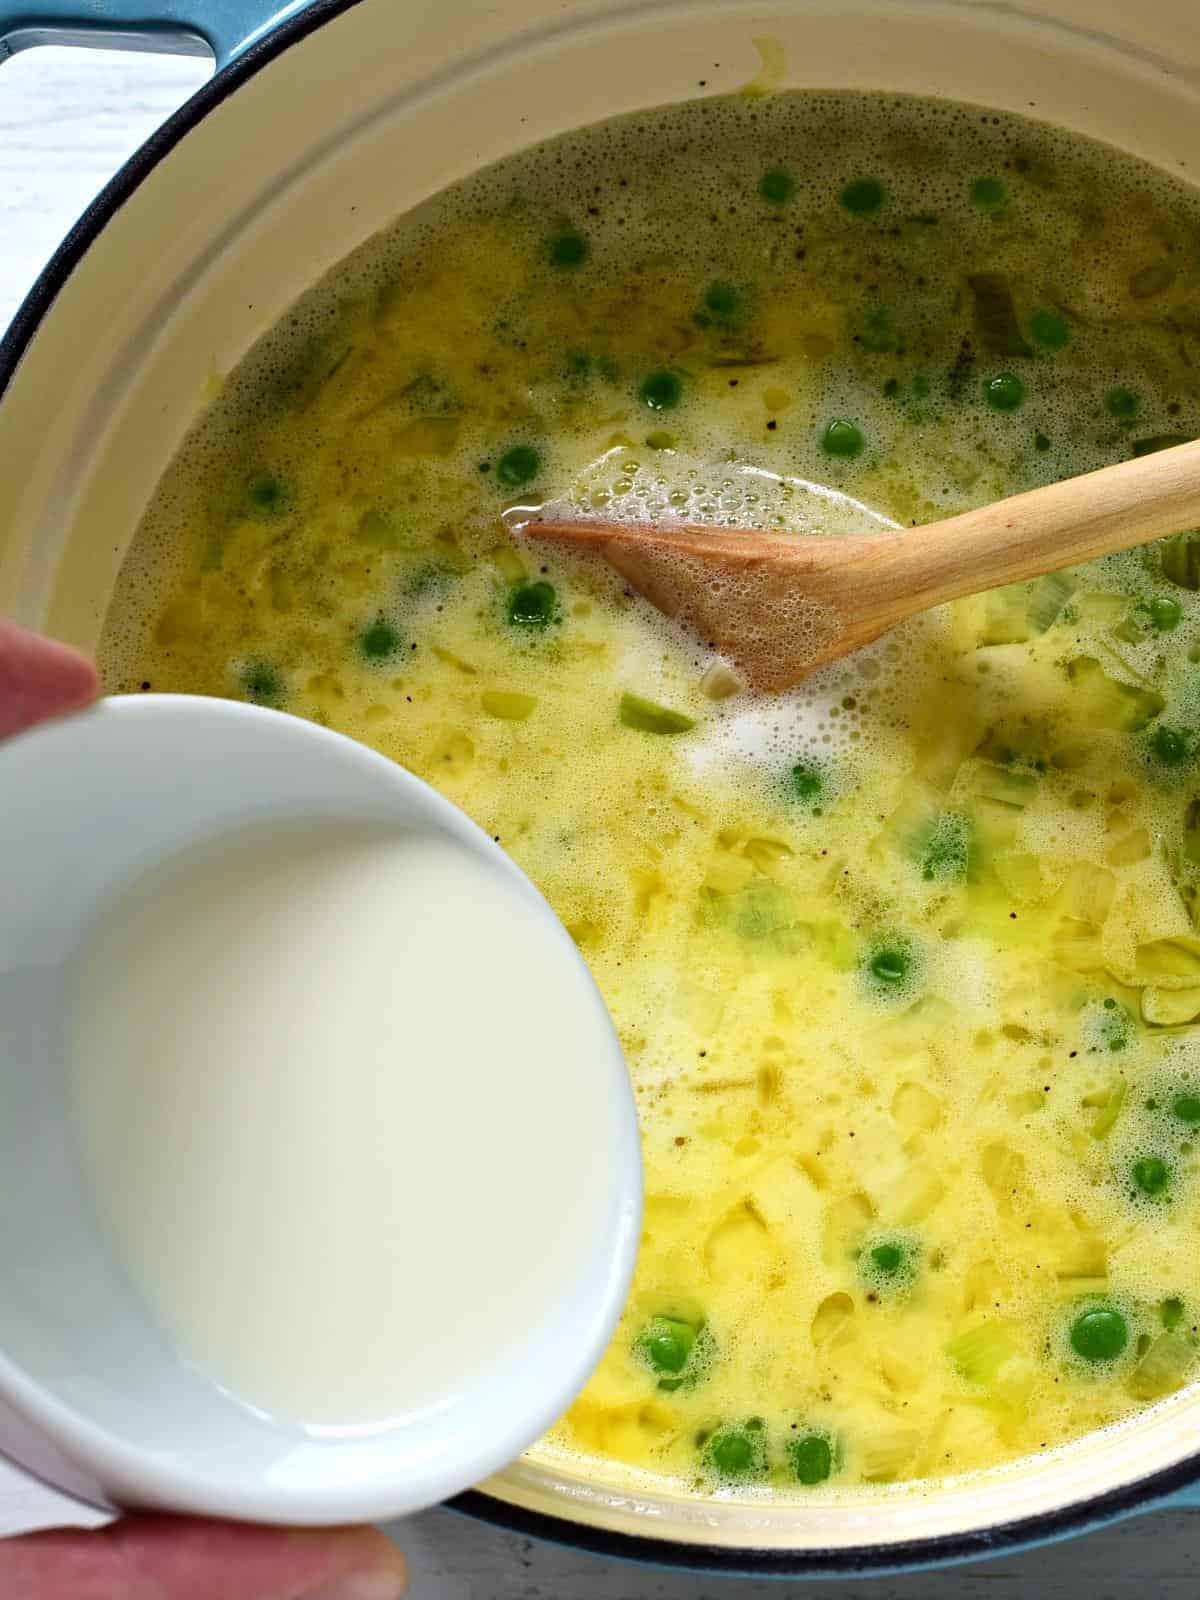 Putting cream into pea soup.